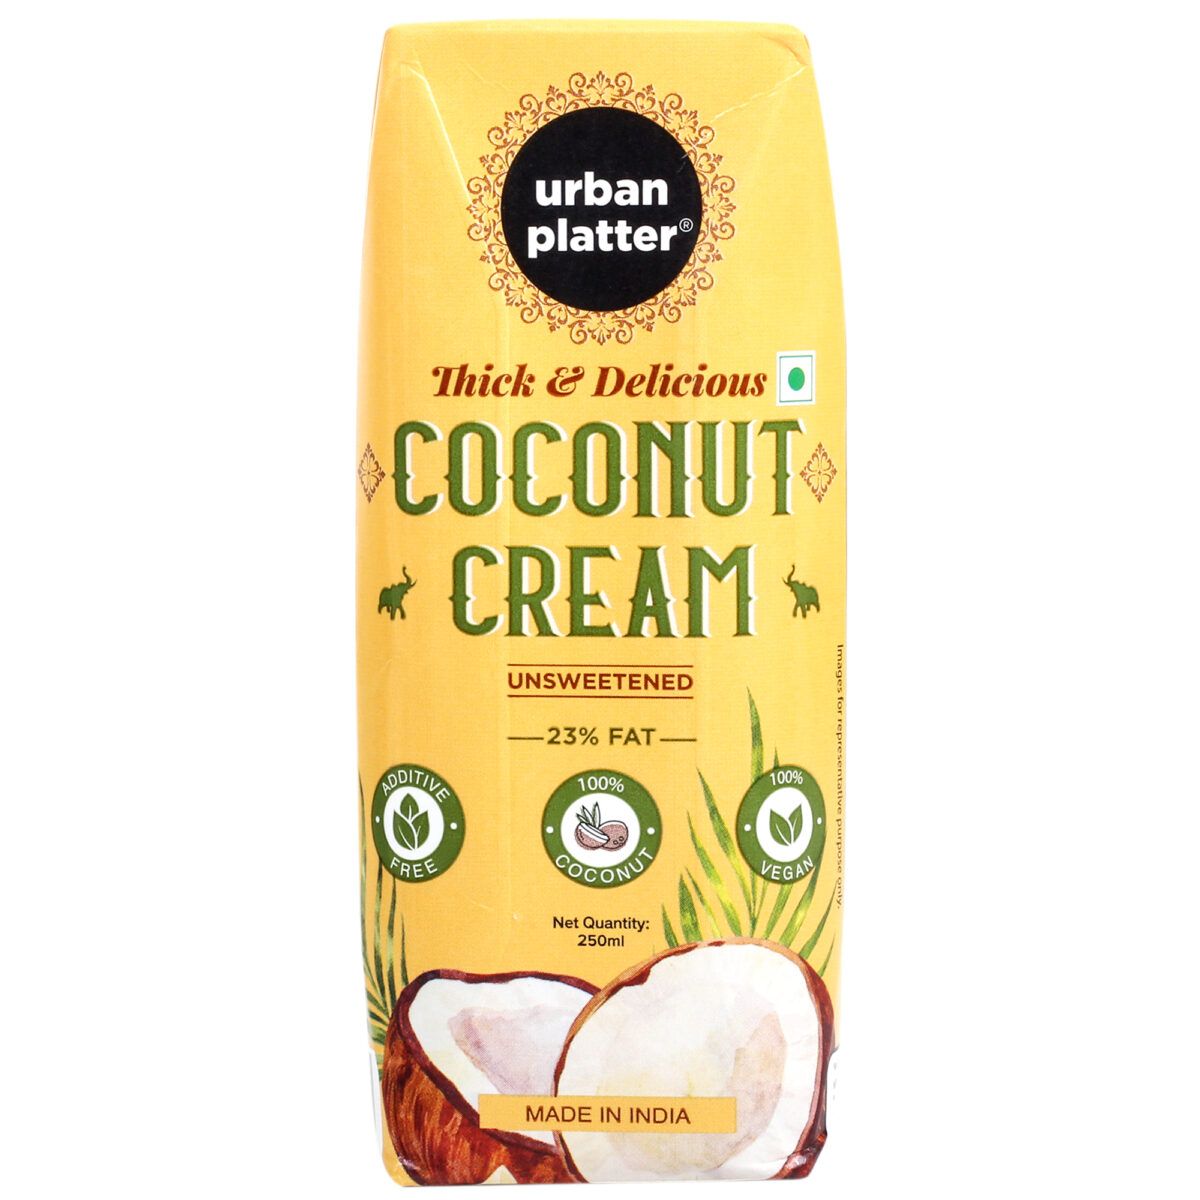 Urban Platter Unsweetened Coconut Cream Image